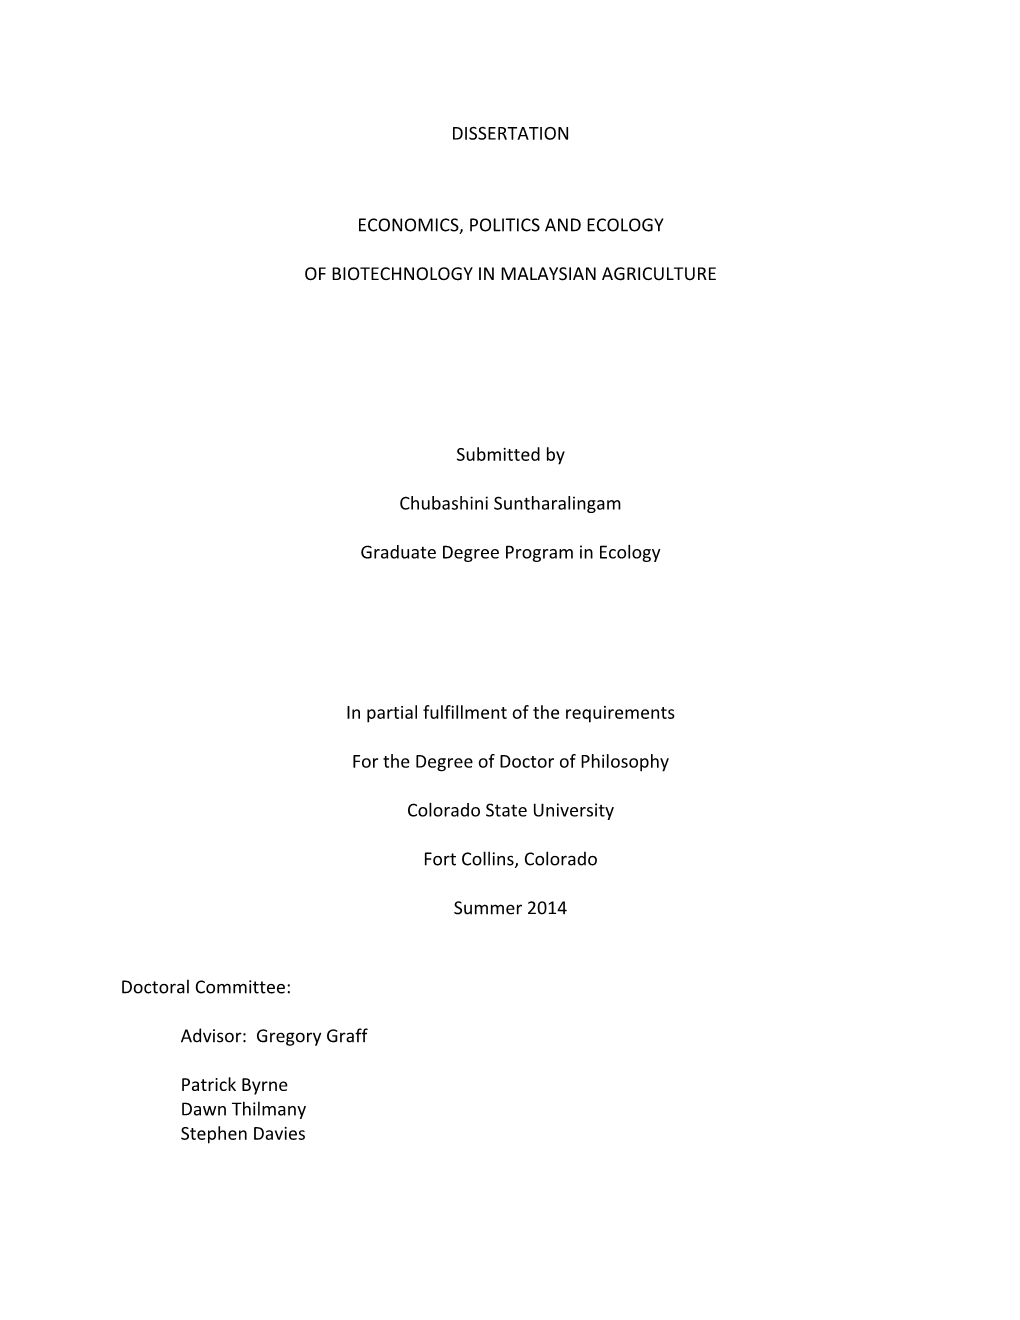 Dissertation Economics, Politics and Ecology Of